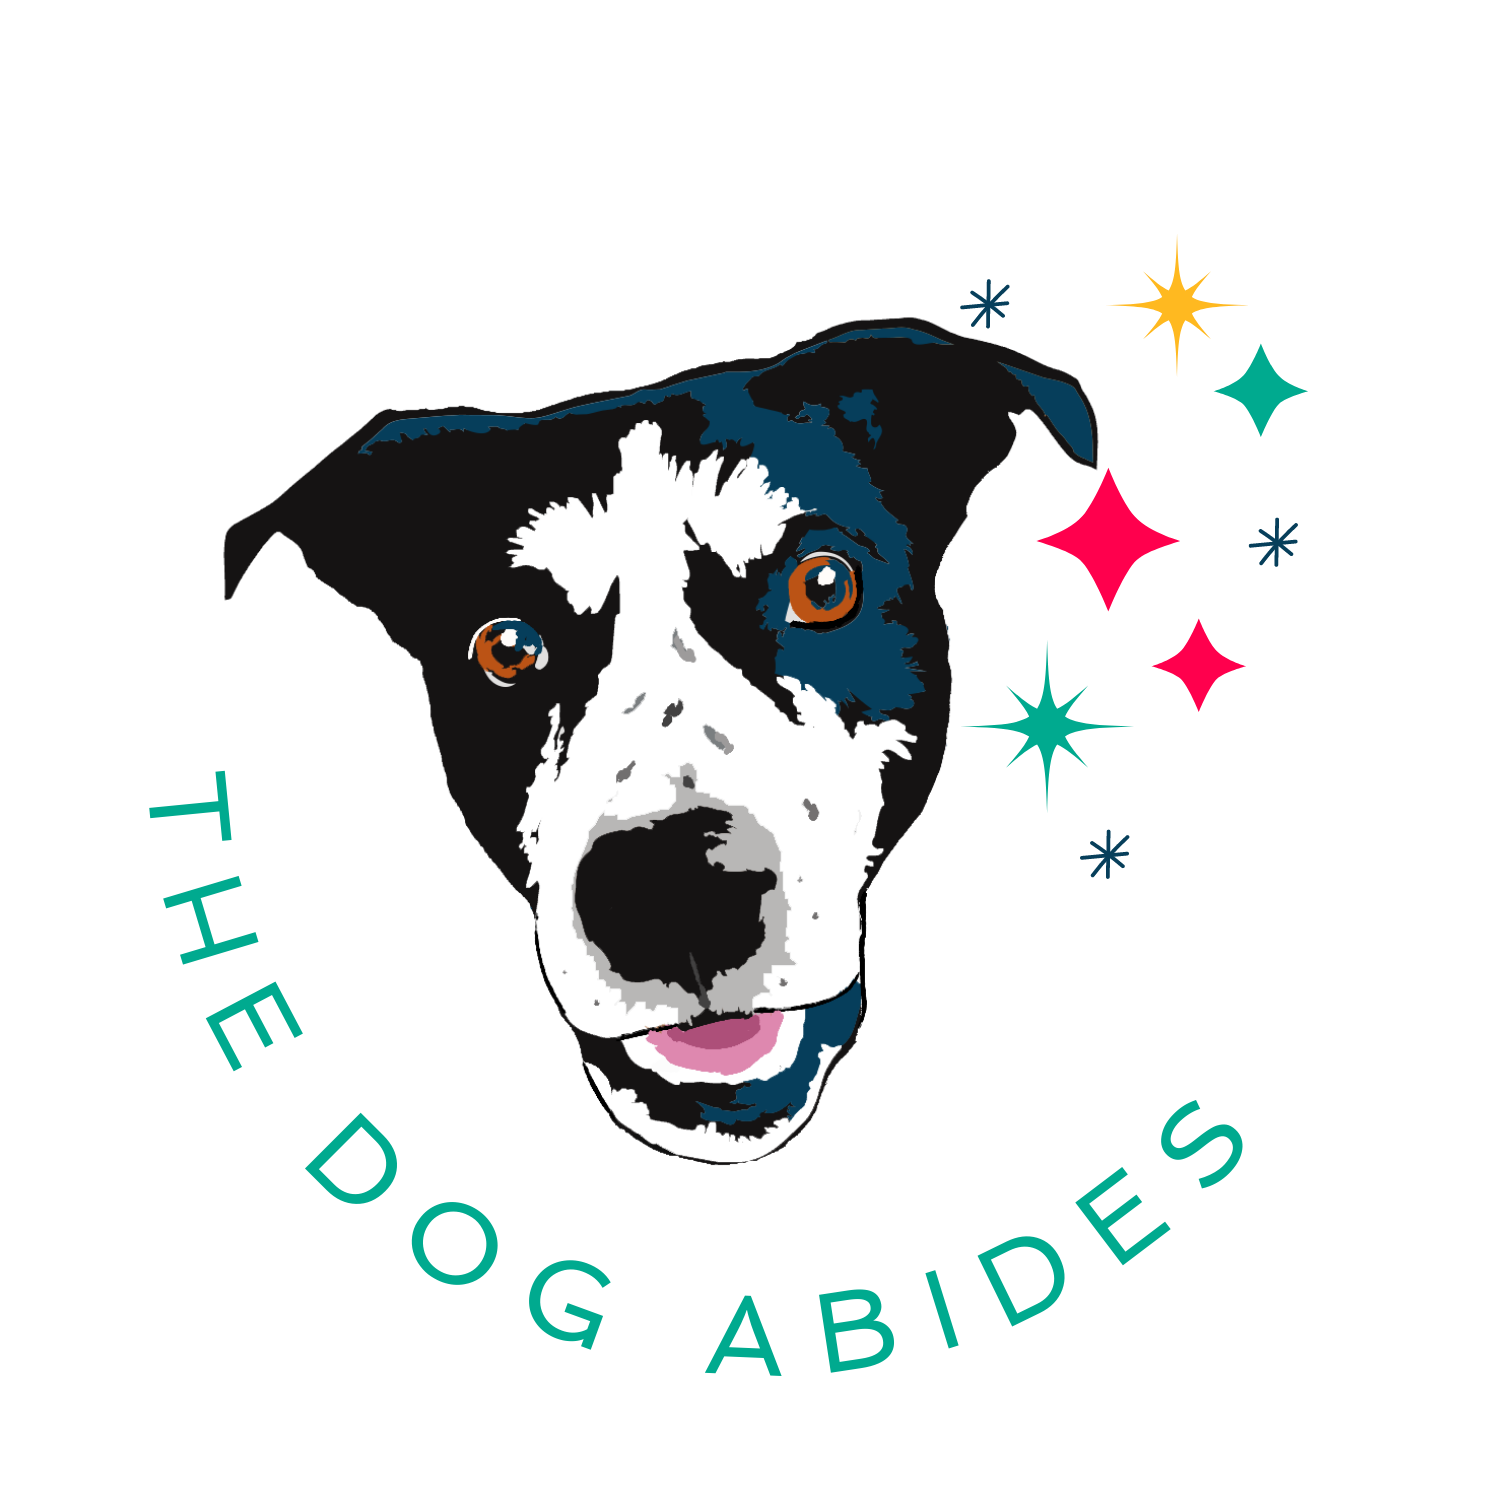 The Dog Abides